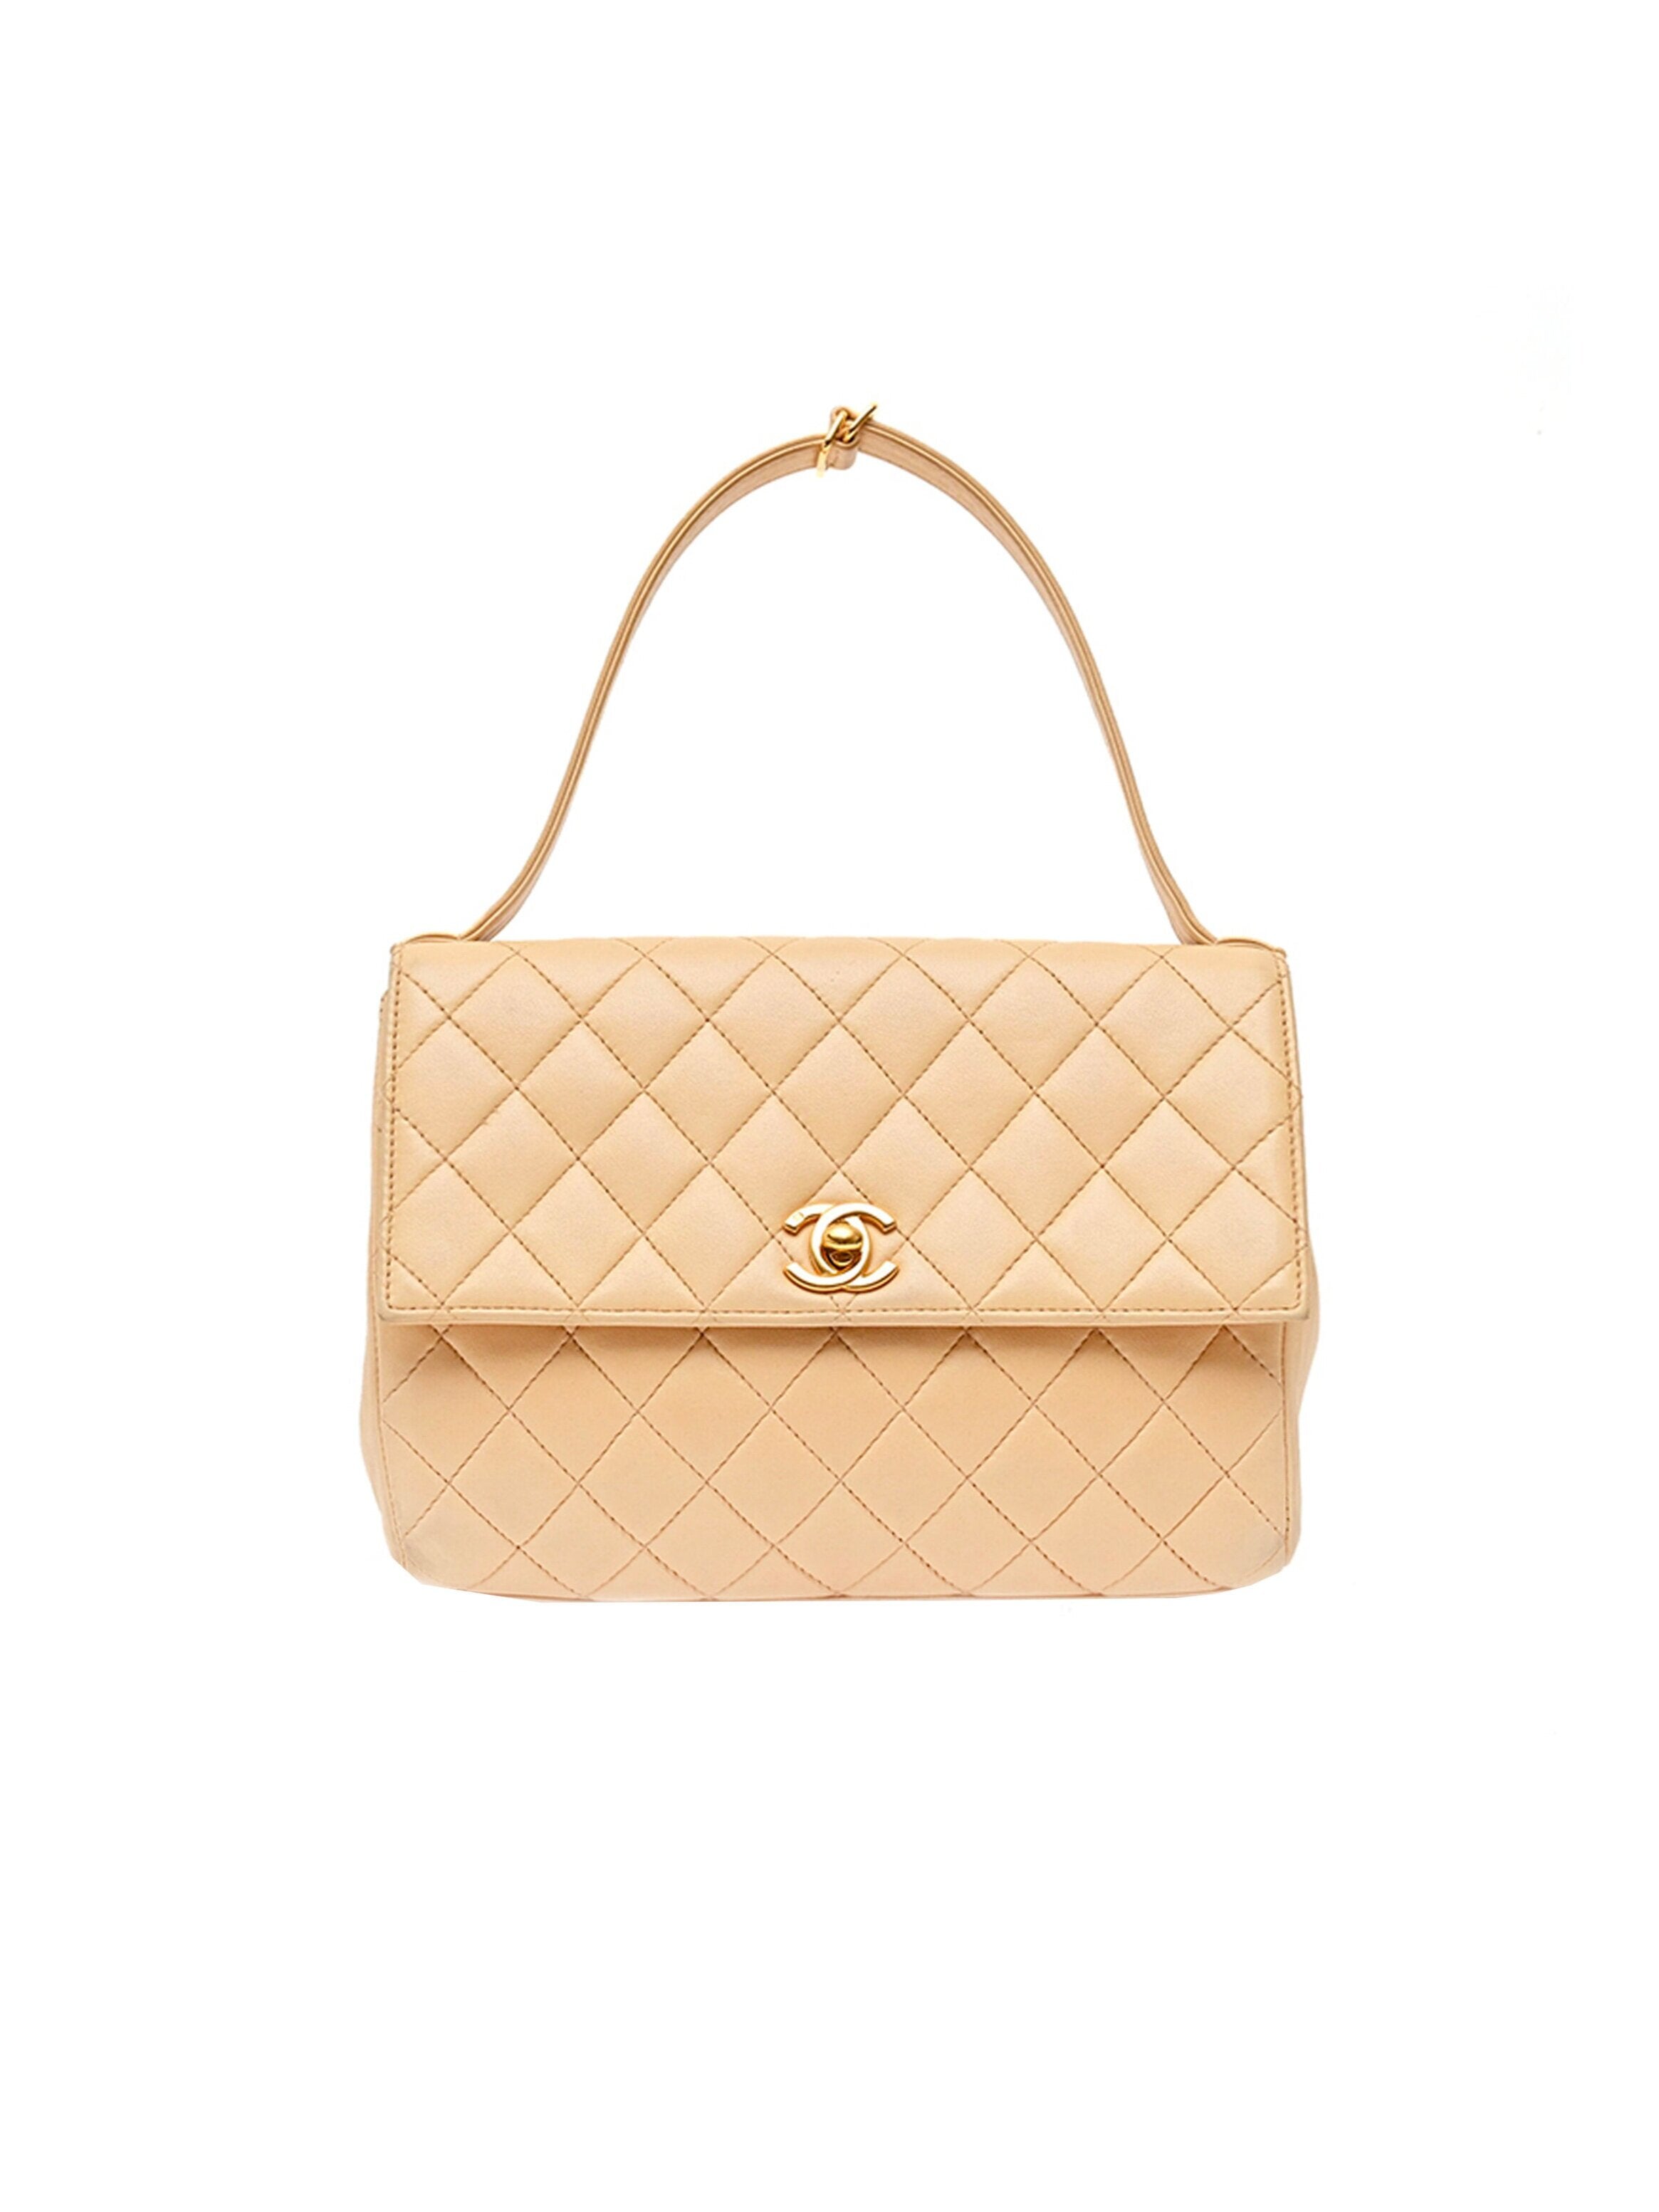 Chanel 2000s Beige Small Leather Matresse 5s Handbag